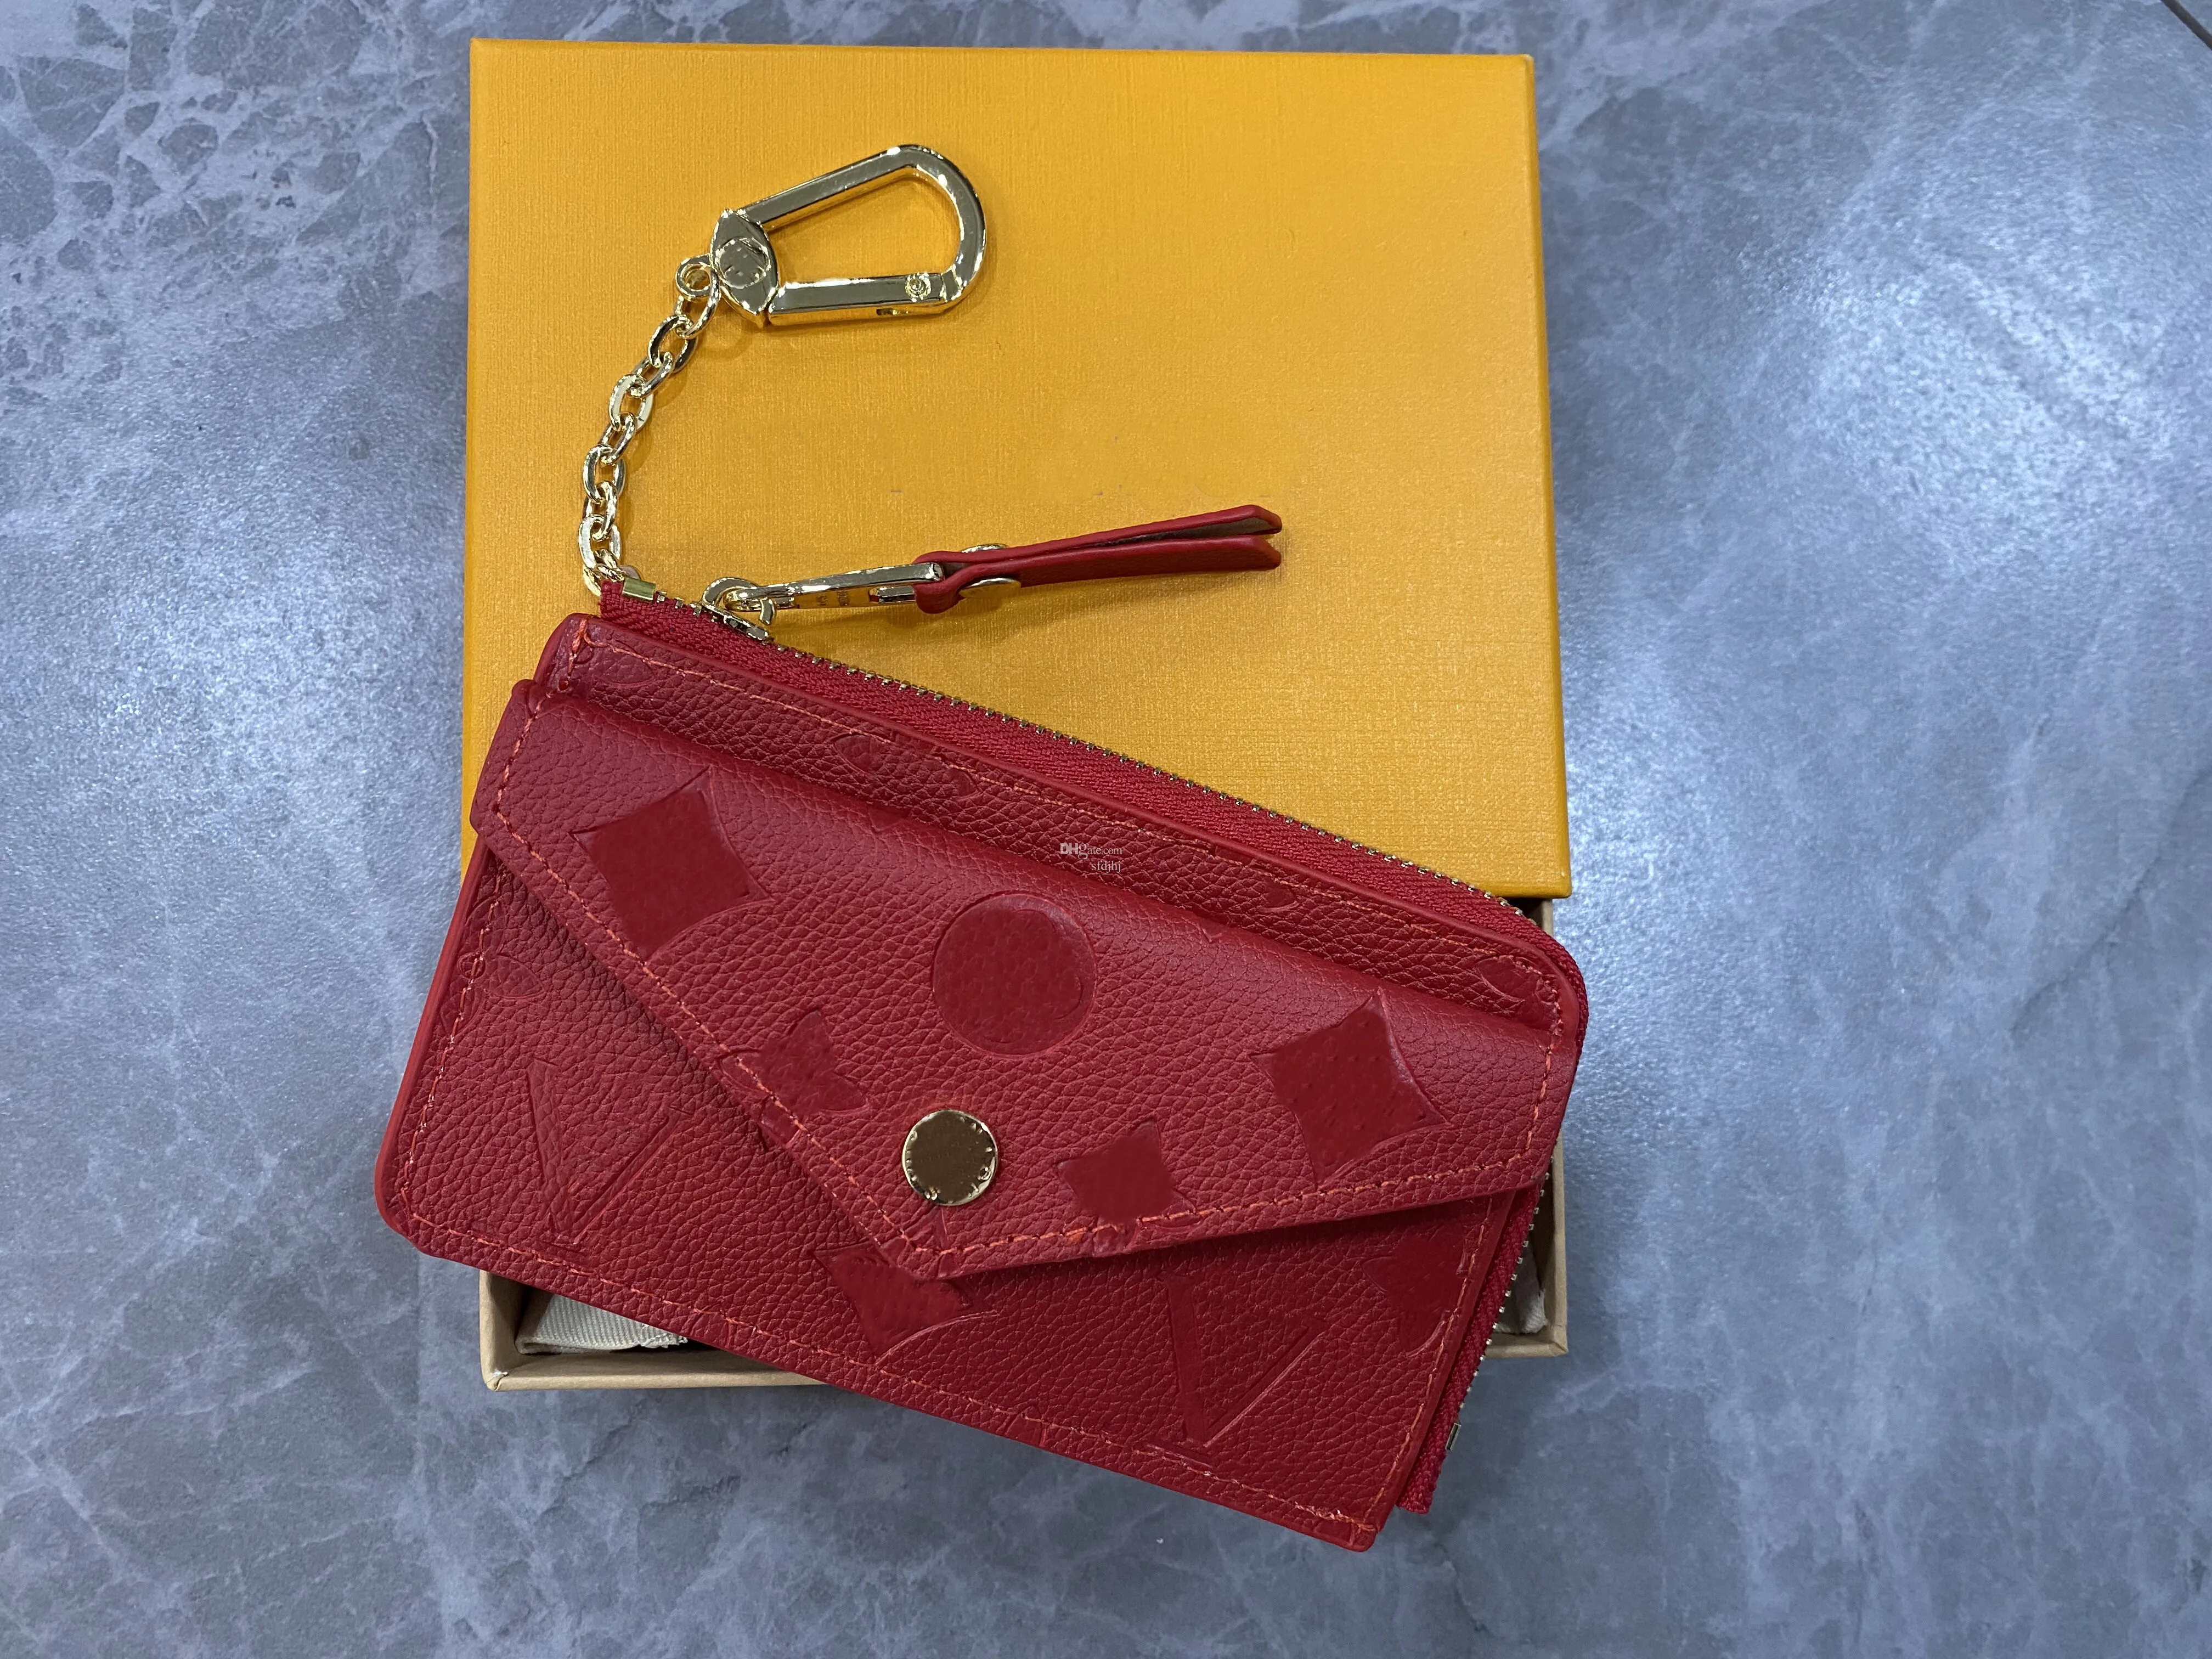 5A kwaliteit Luxe ontwerp Draagbare SLEUTEL P0UCH portemonnee klassieke Man/vrouwen Portemonnee Keten tas Met stofzak en geschenkdoos